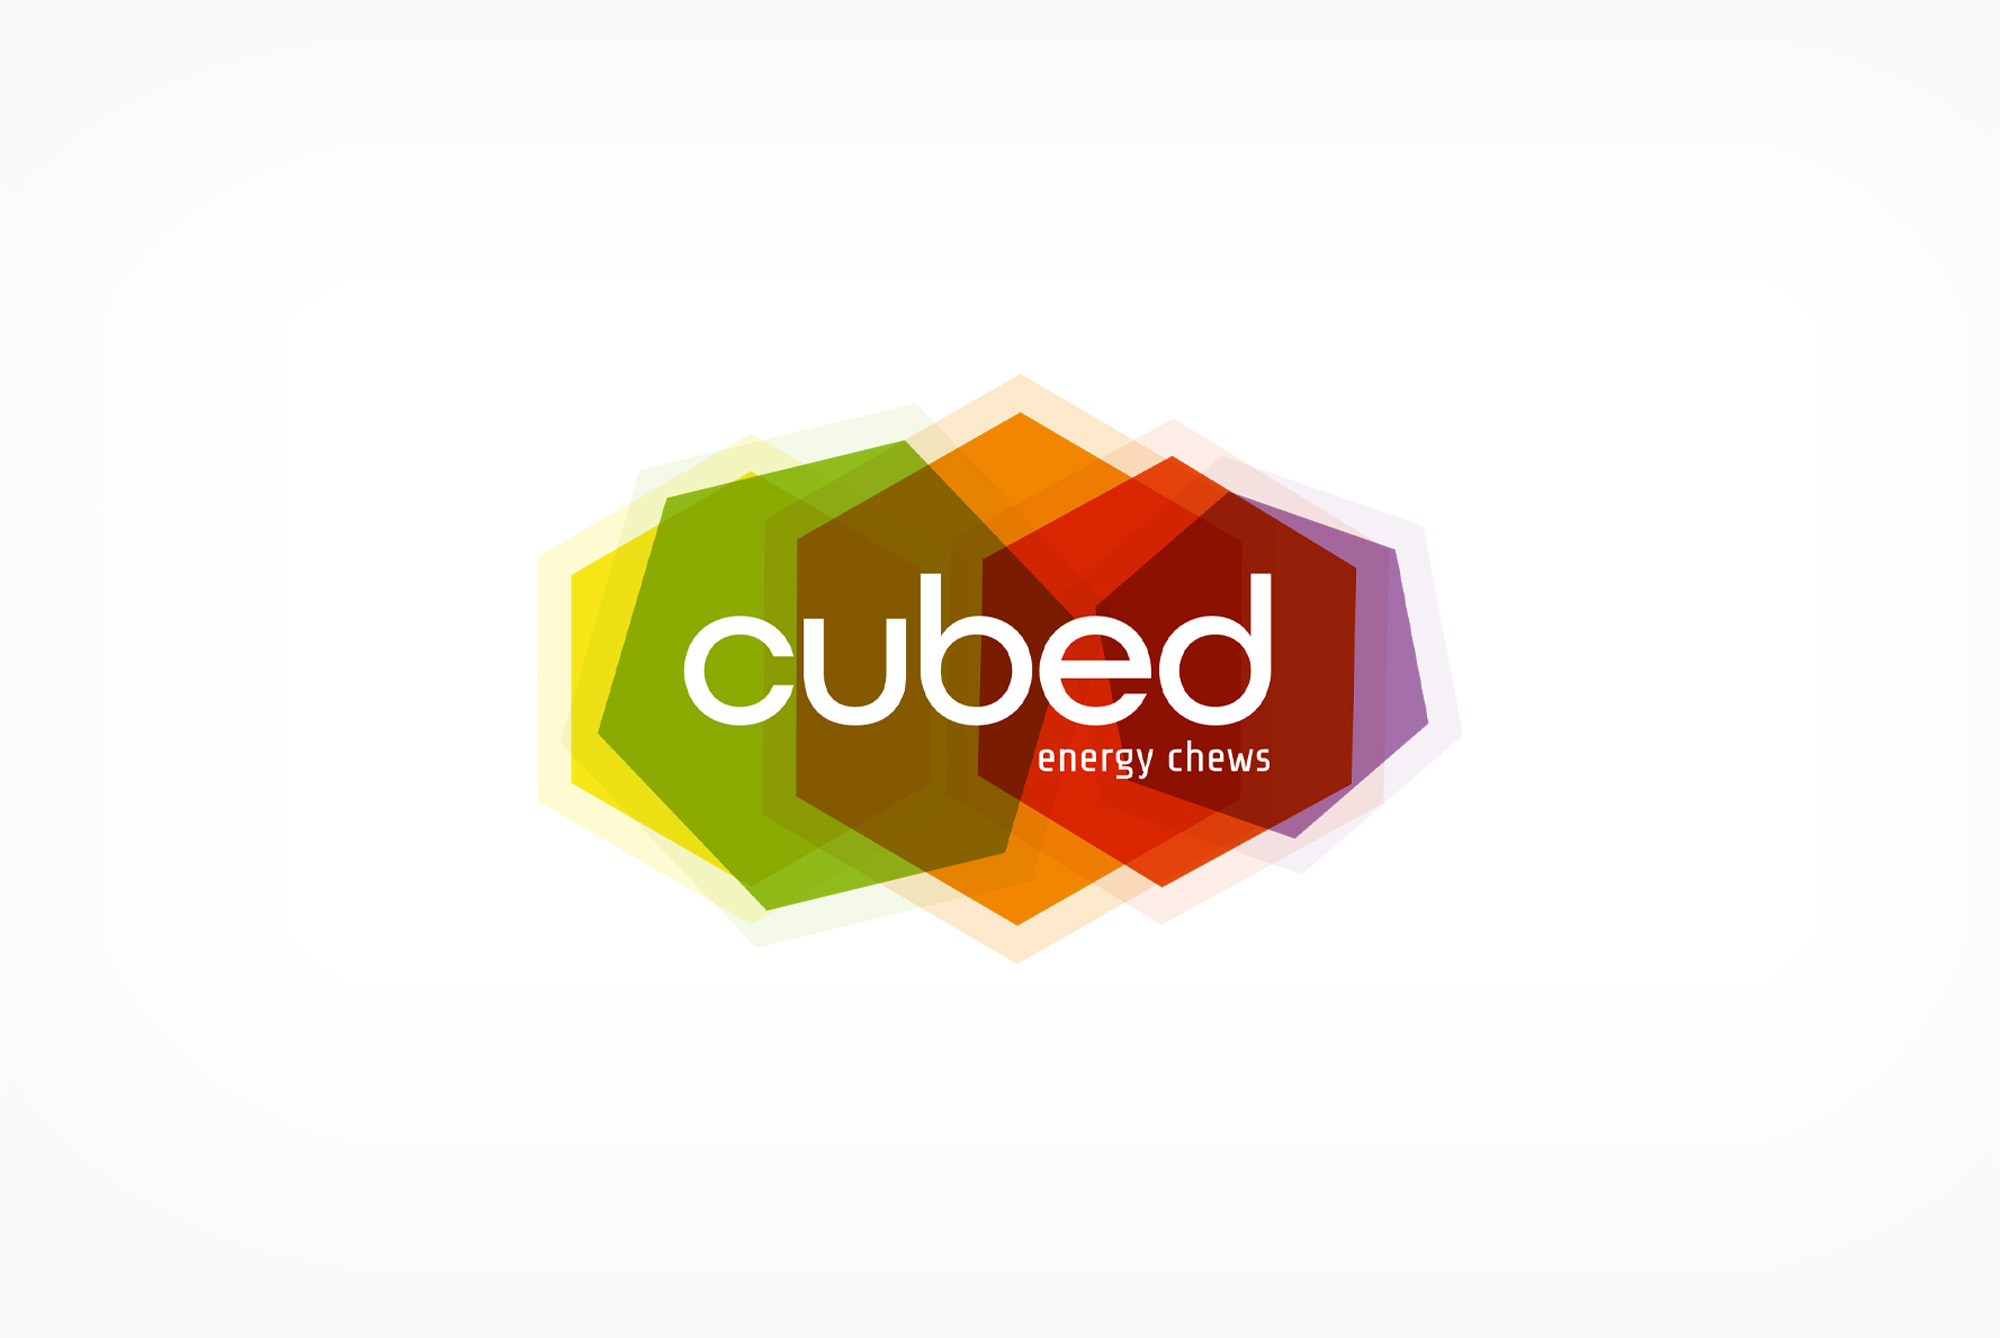 Cubed CBD Energy Chews logo.